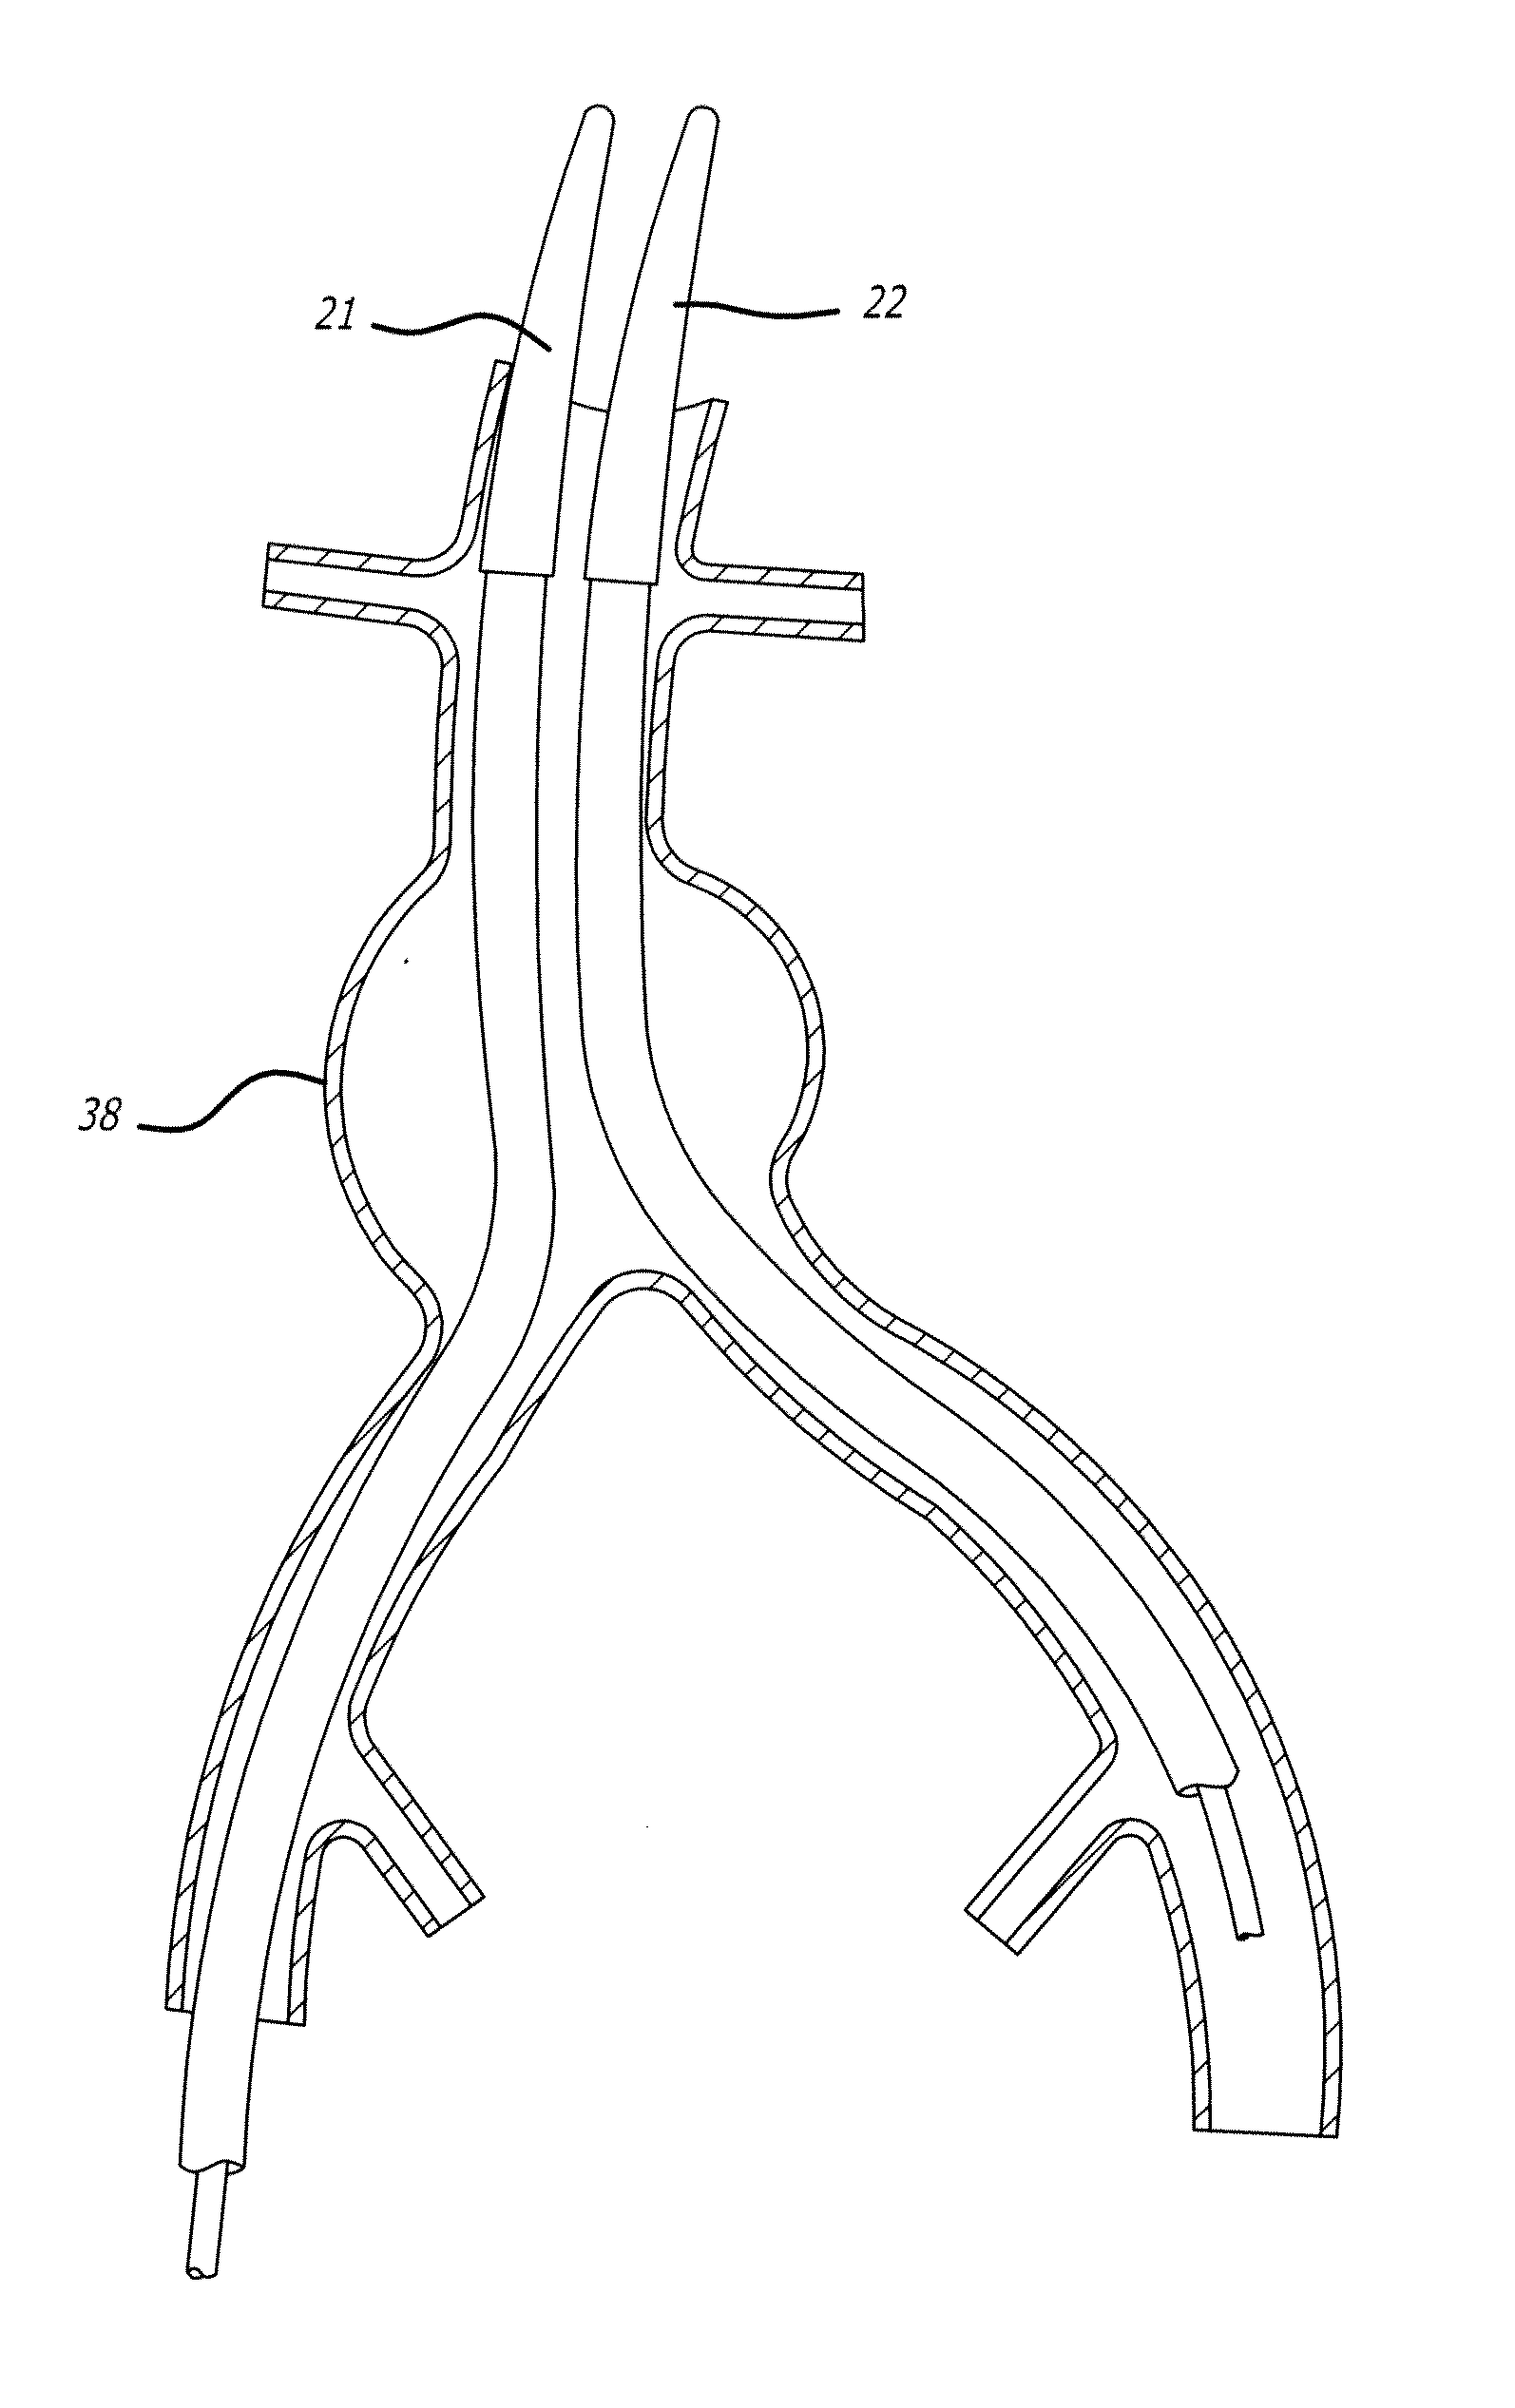 Low-profile modular abdominal aortic aneurysm graft